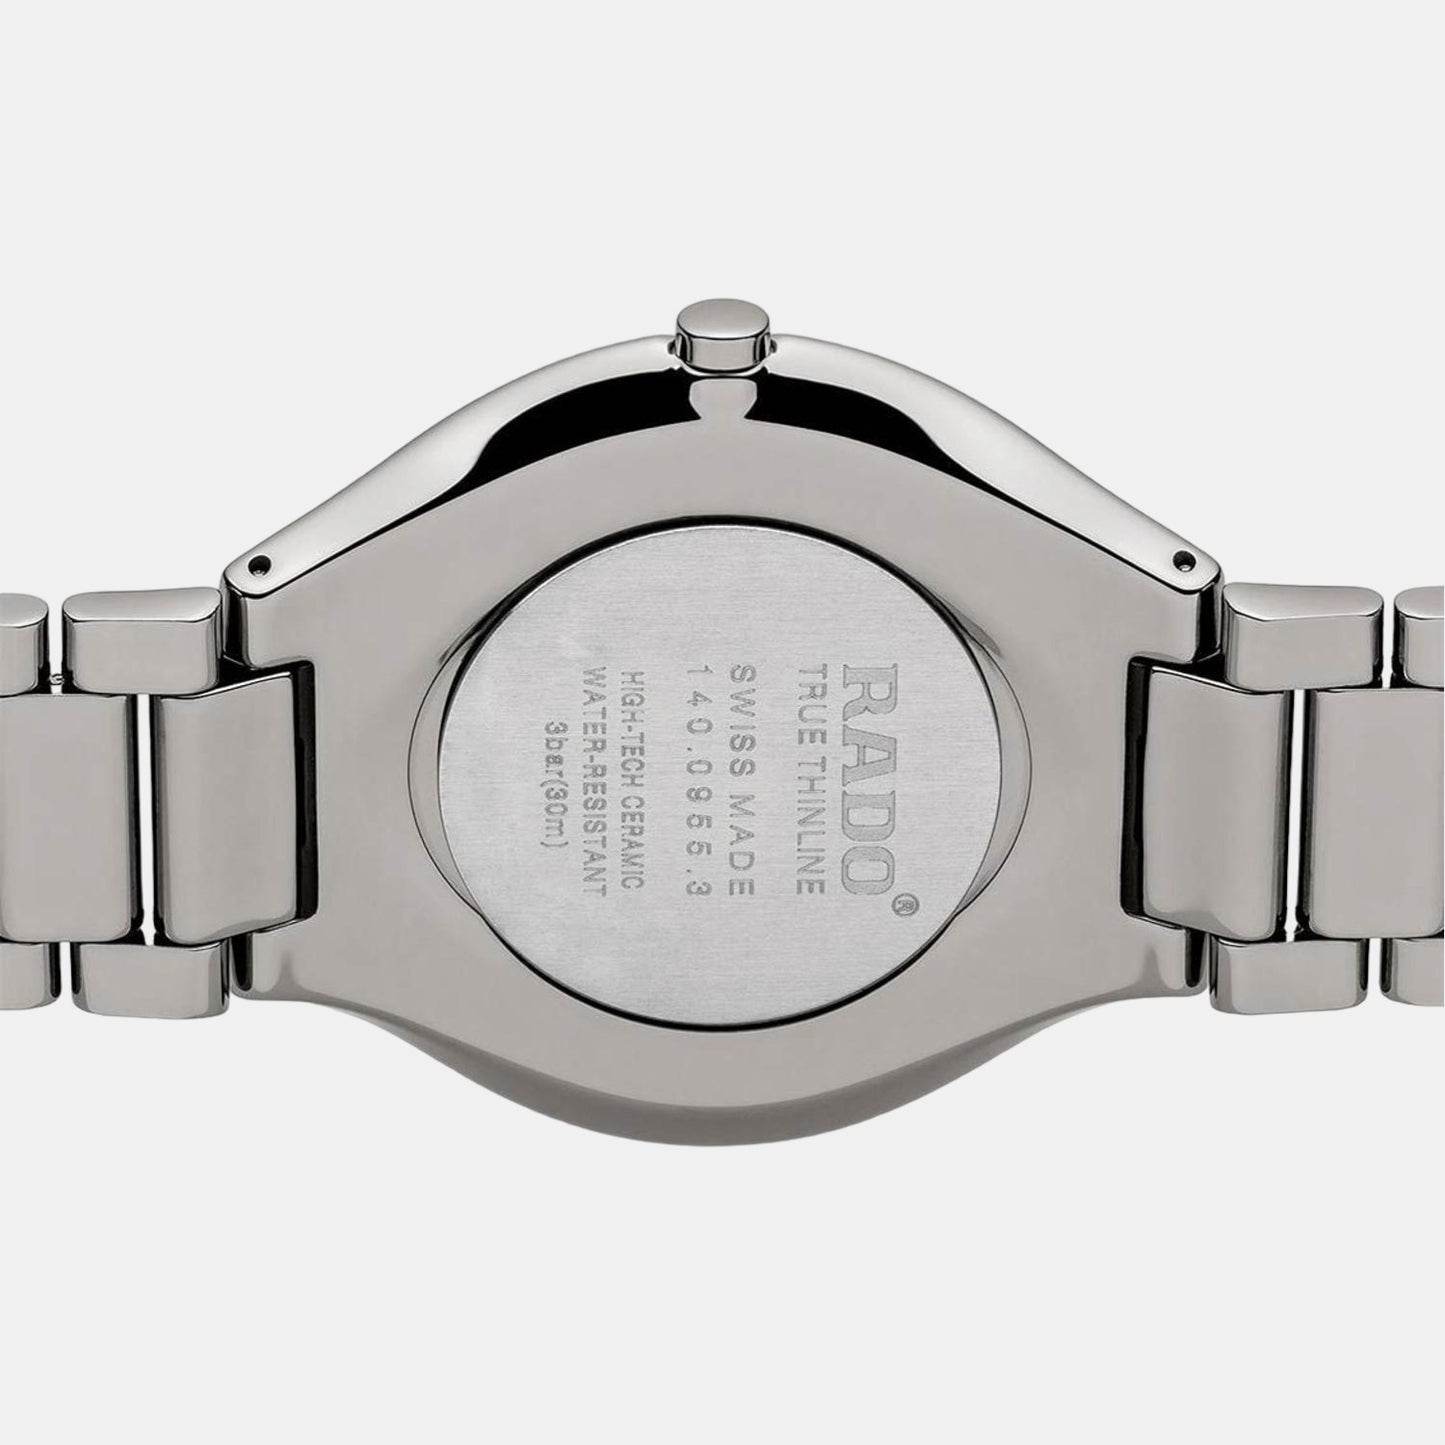 rado-stainless-steel-grey-analog-unisex-watch-r27010102